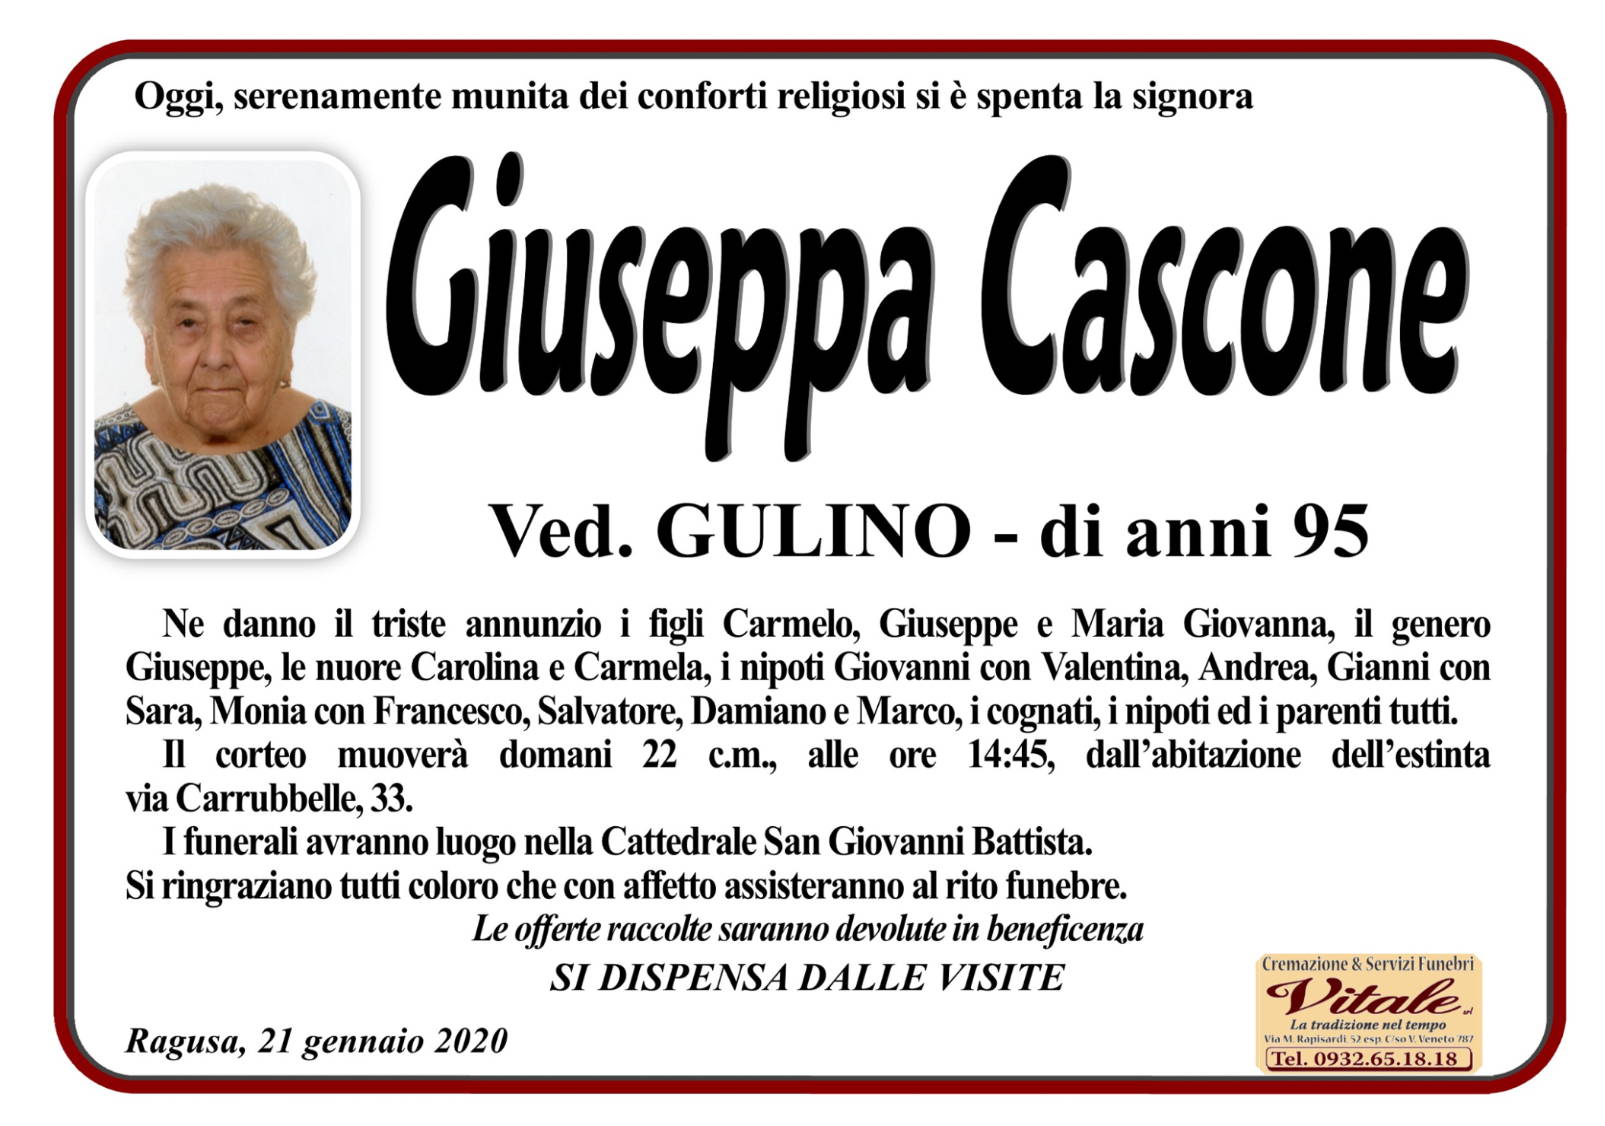 Giuseppa Cascone